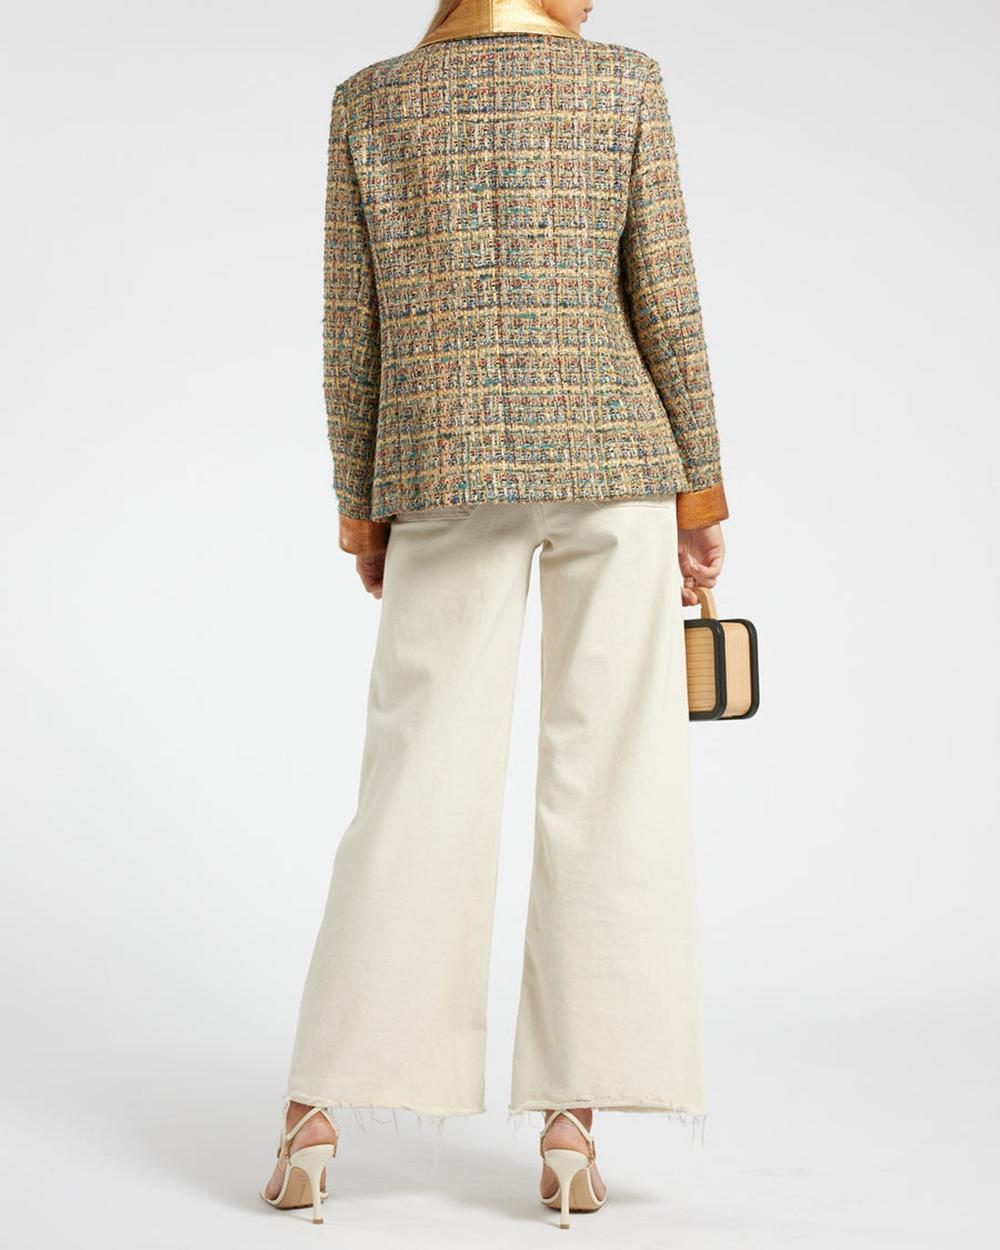 Chanel Kristem Stewart Style Paris / Egypt Tweed Jacket  For Sale 15